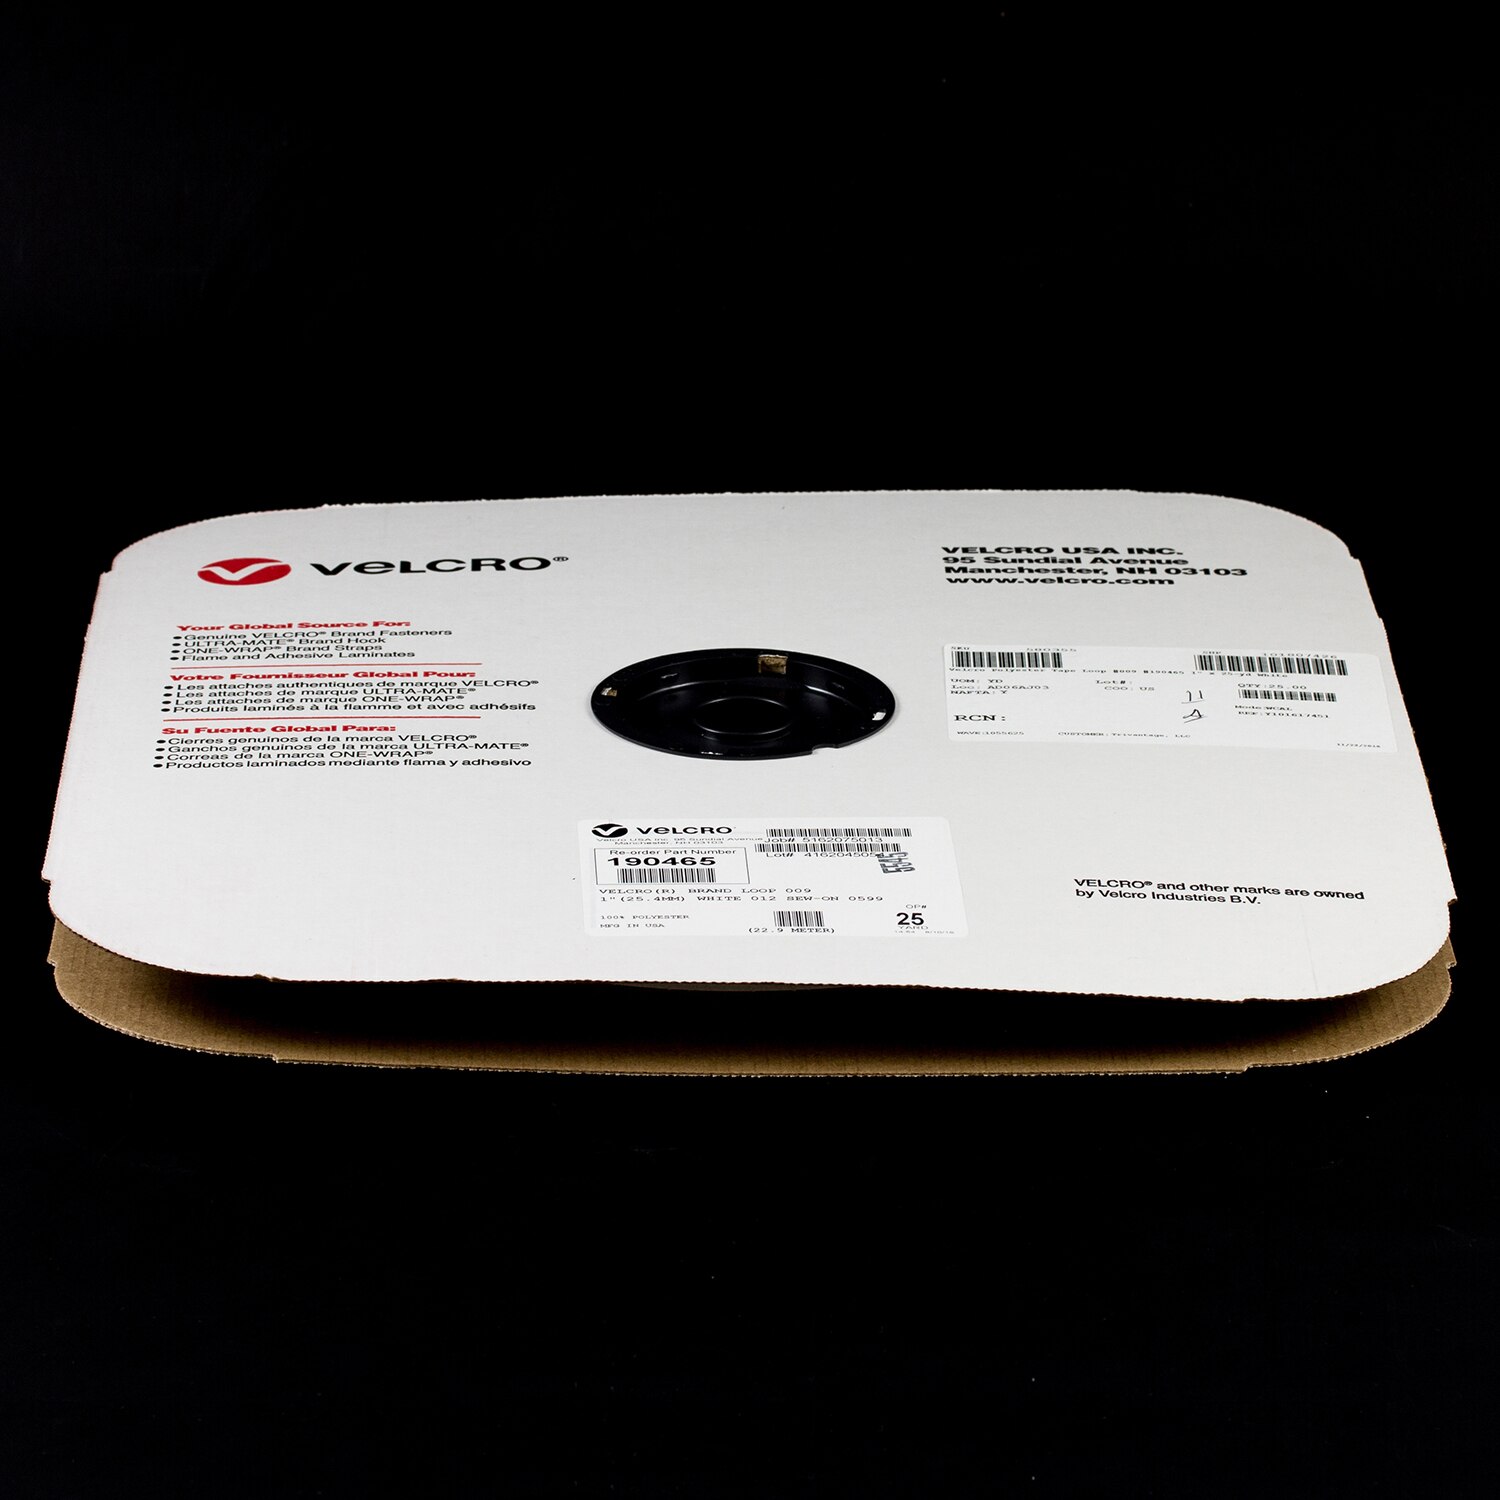 VELCRO® Brand PS15 Loop Self Adhesive Tape Fire Retardant